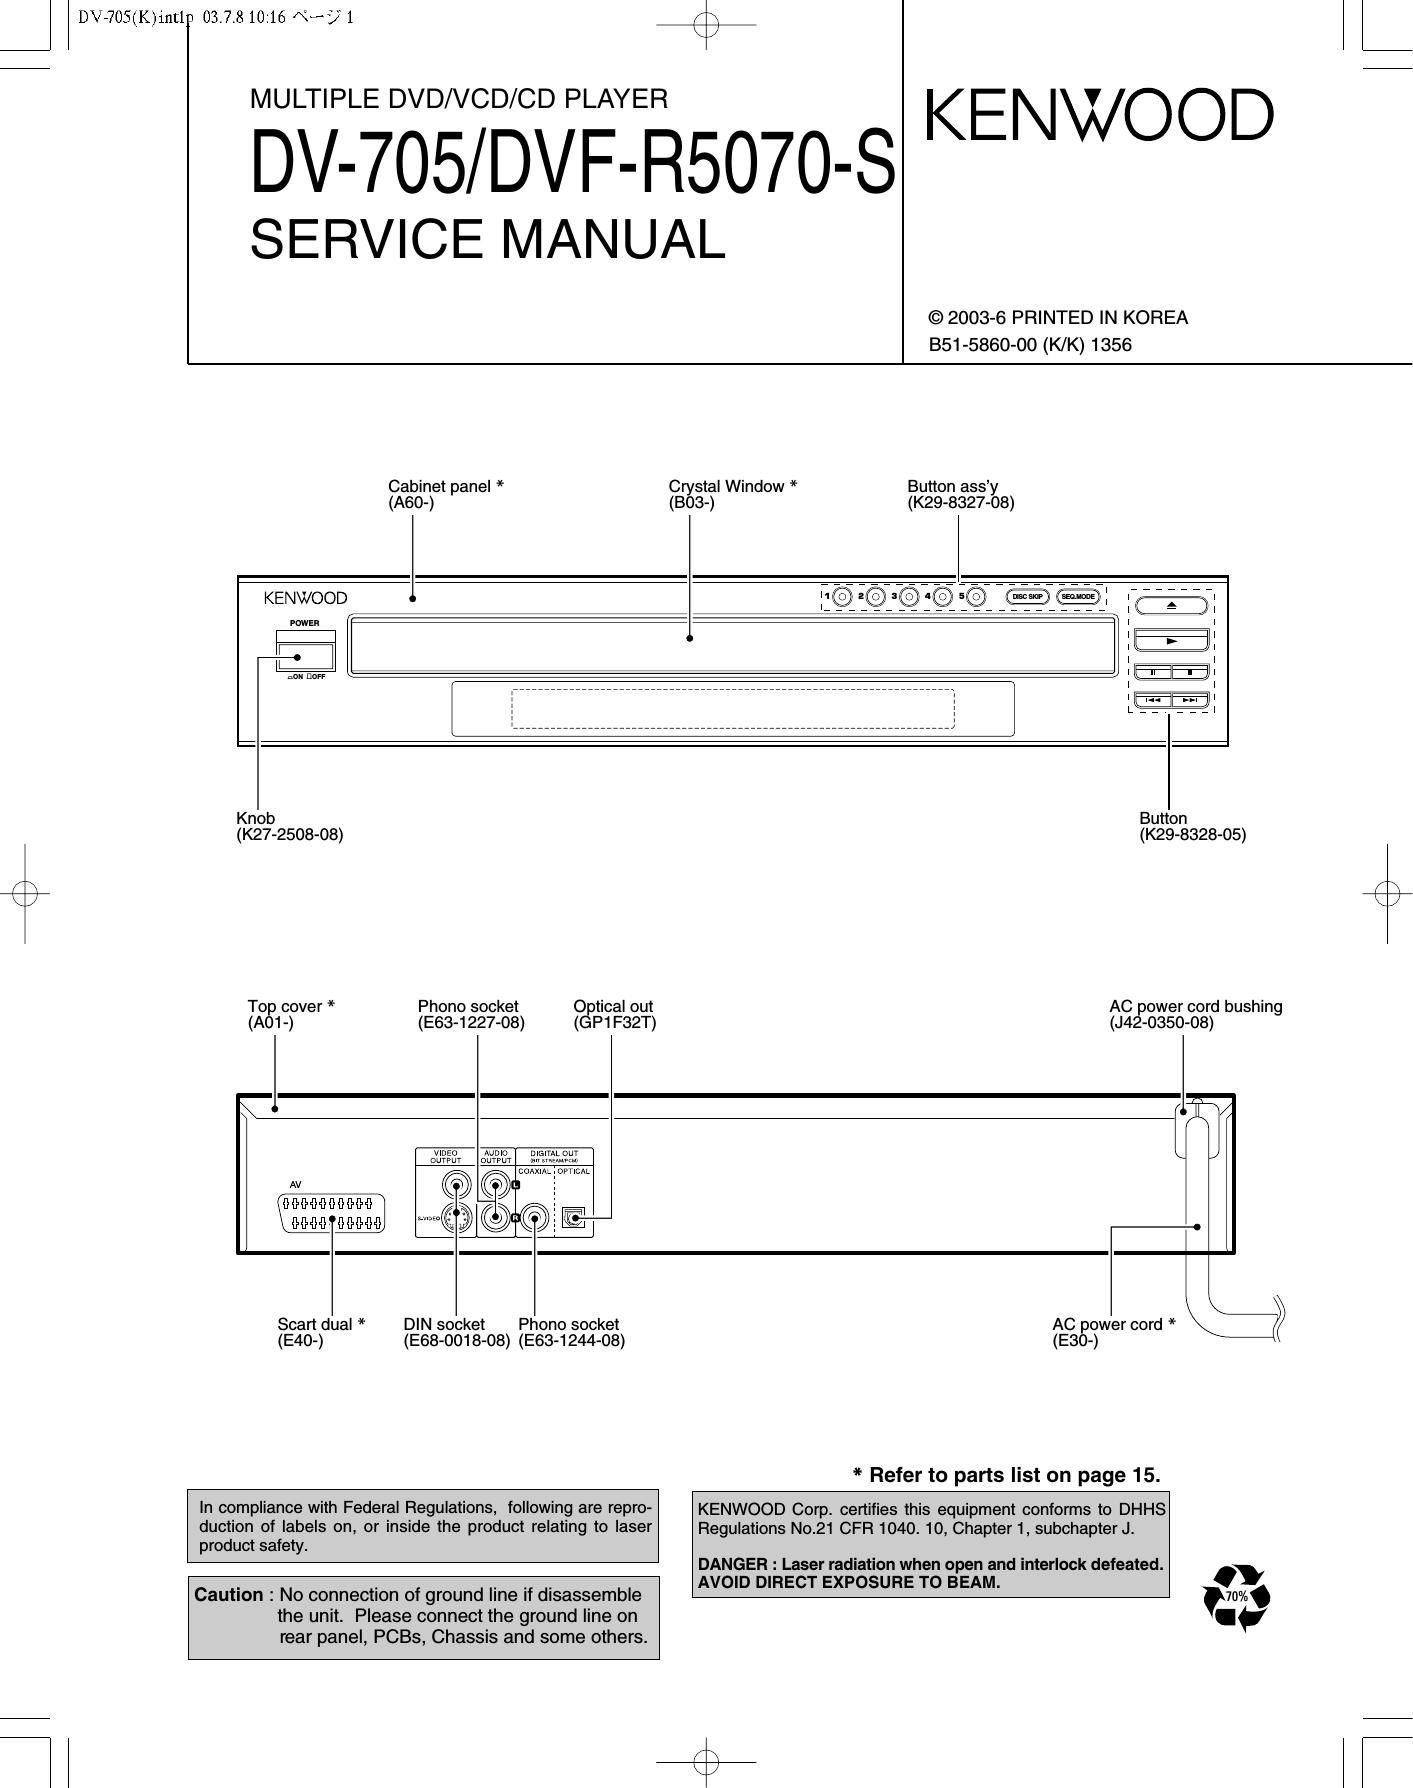 Kenwood DVFR 5070 S Service Manual